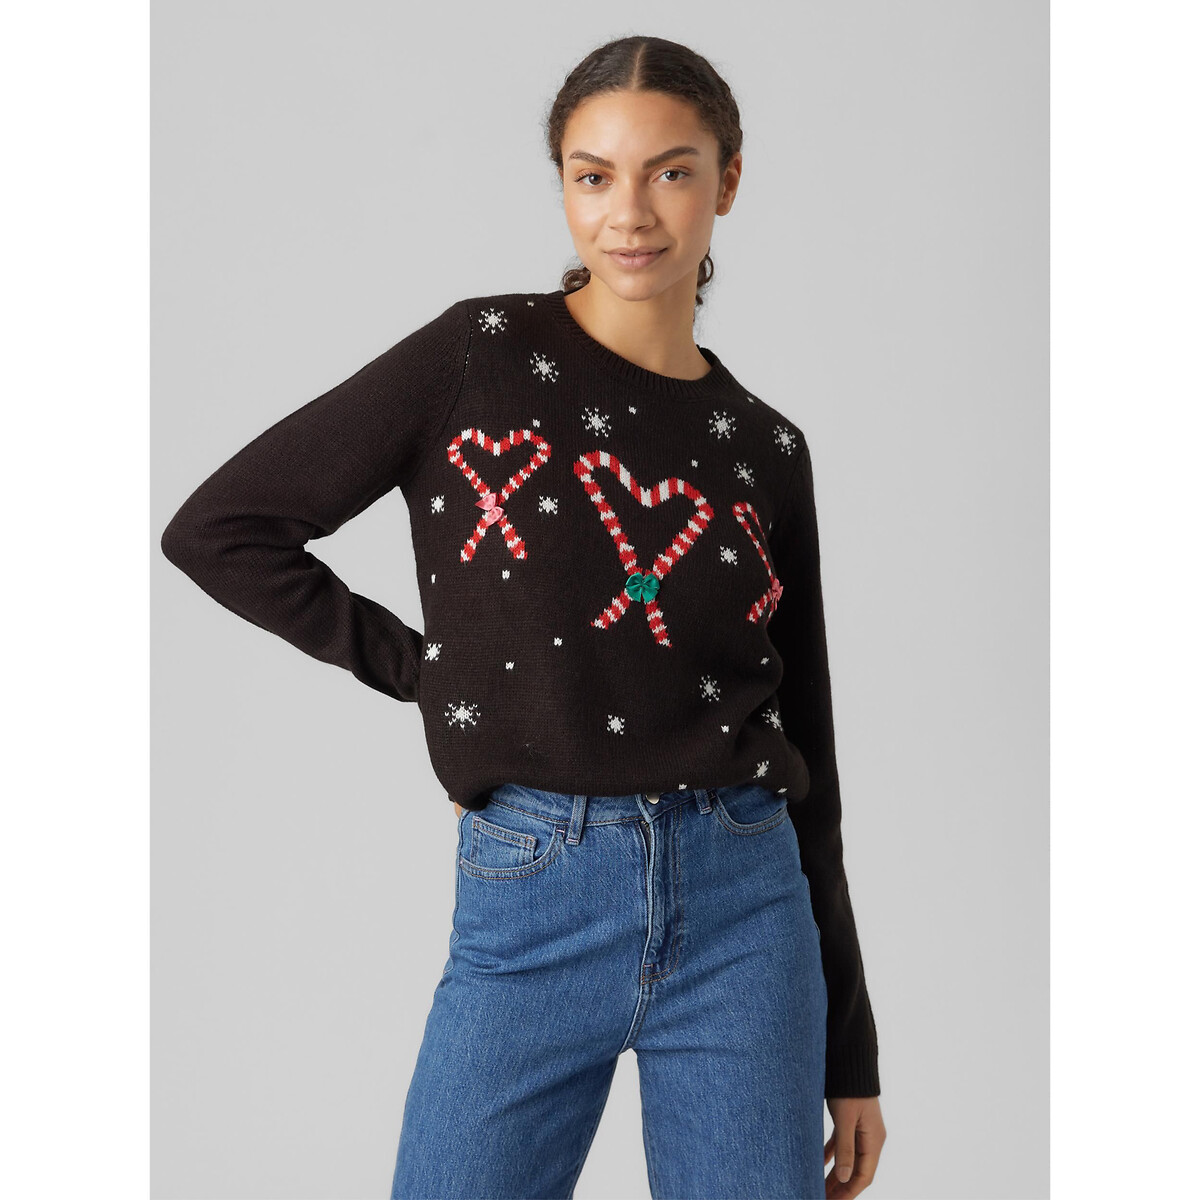 Christmas jumper, black, Vero Moda | La Redoute